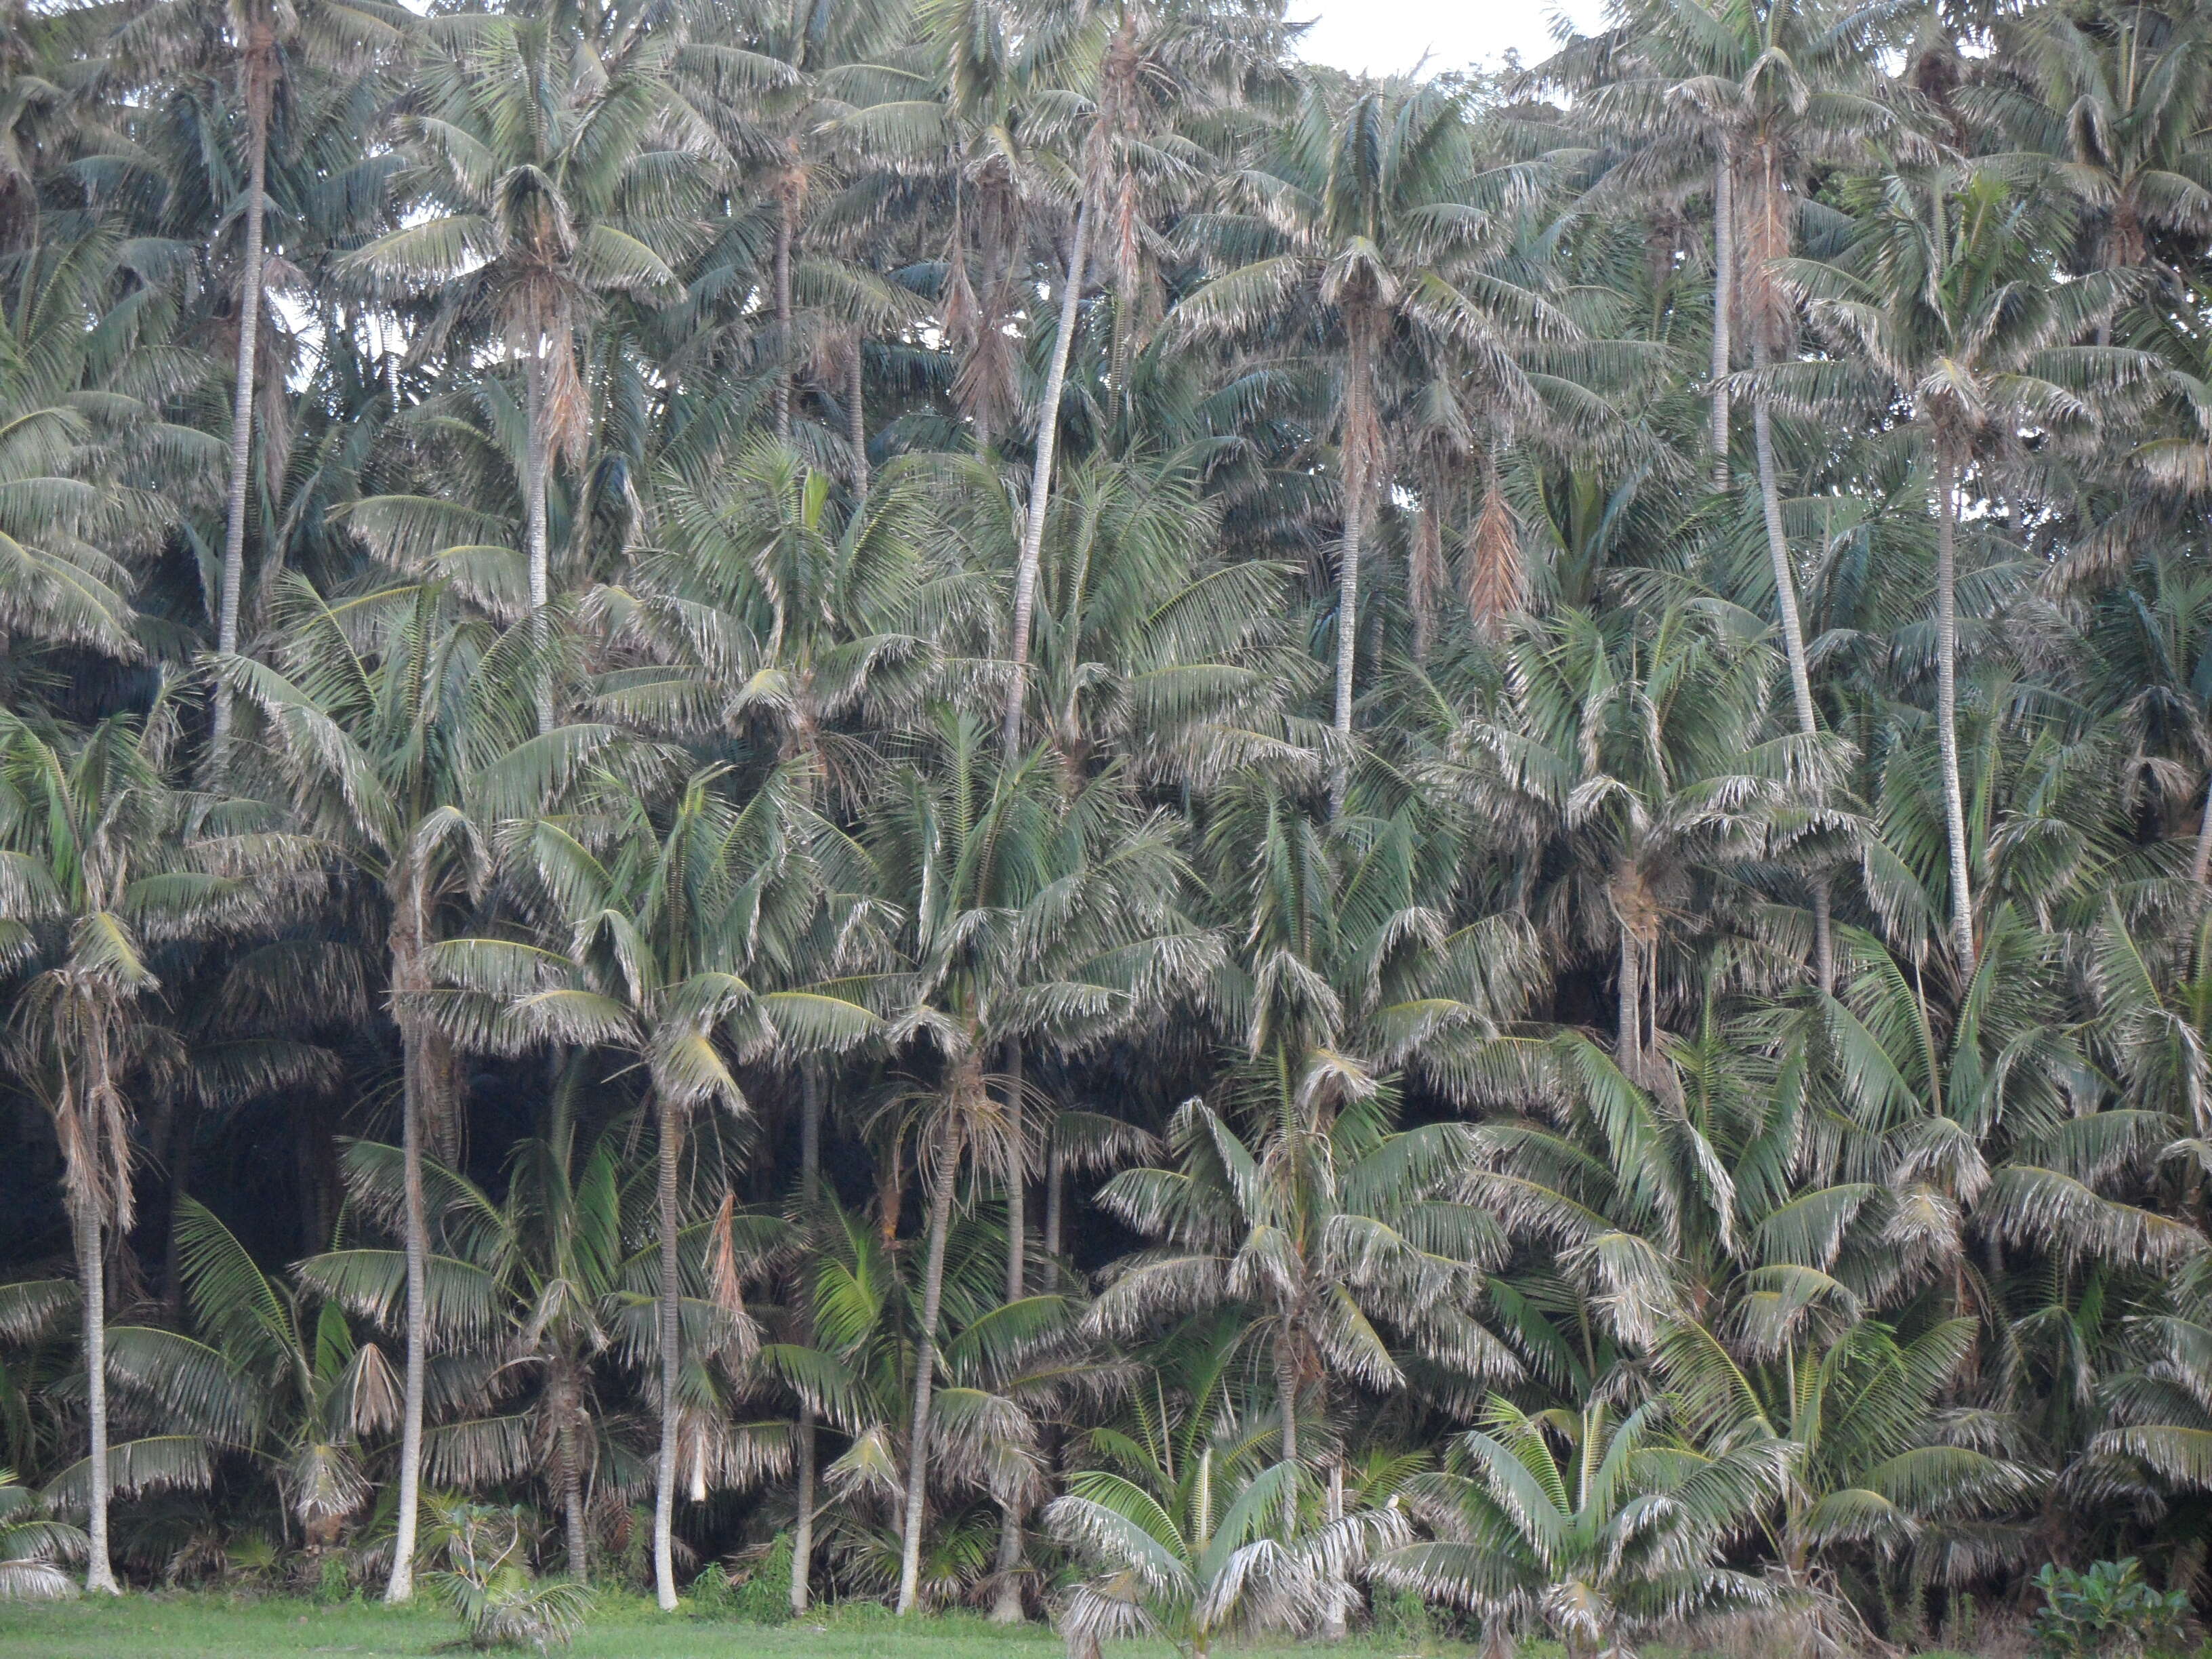 Image of Kentia Palm